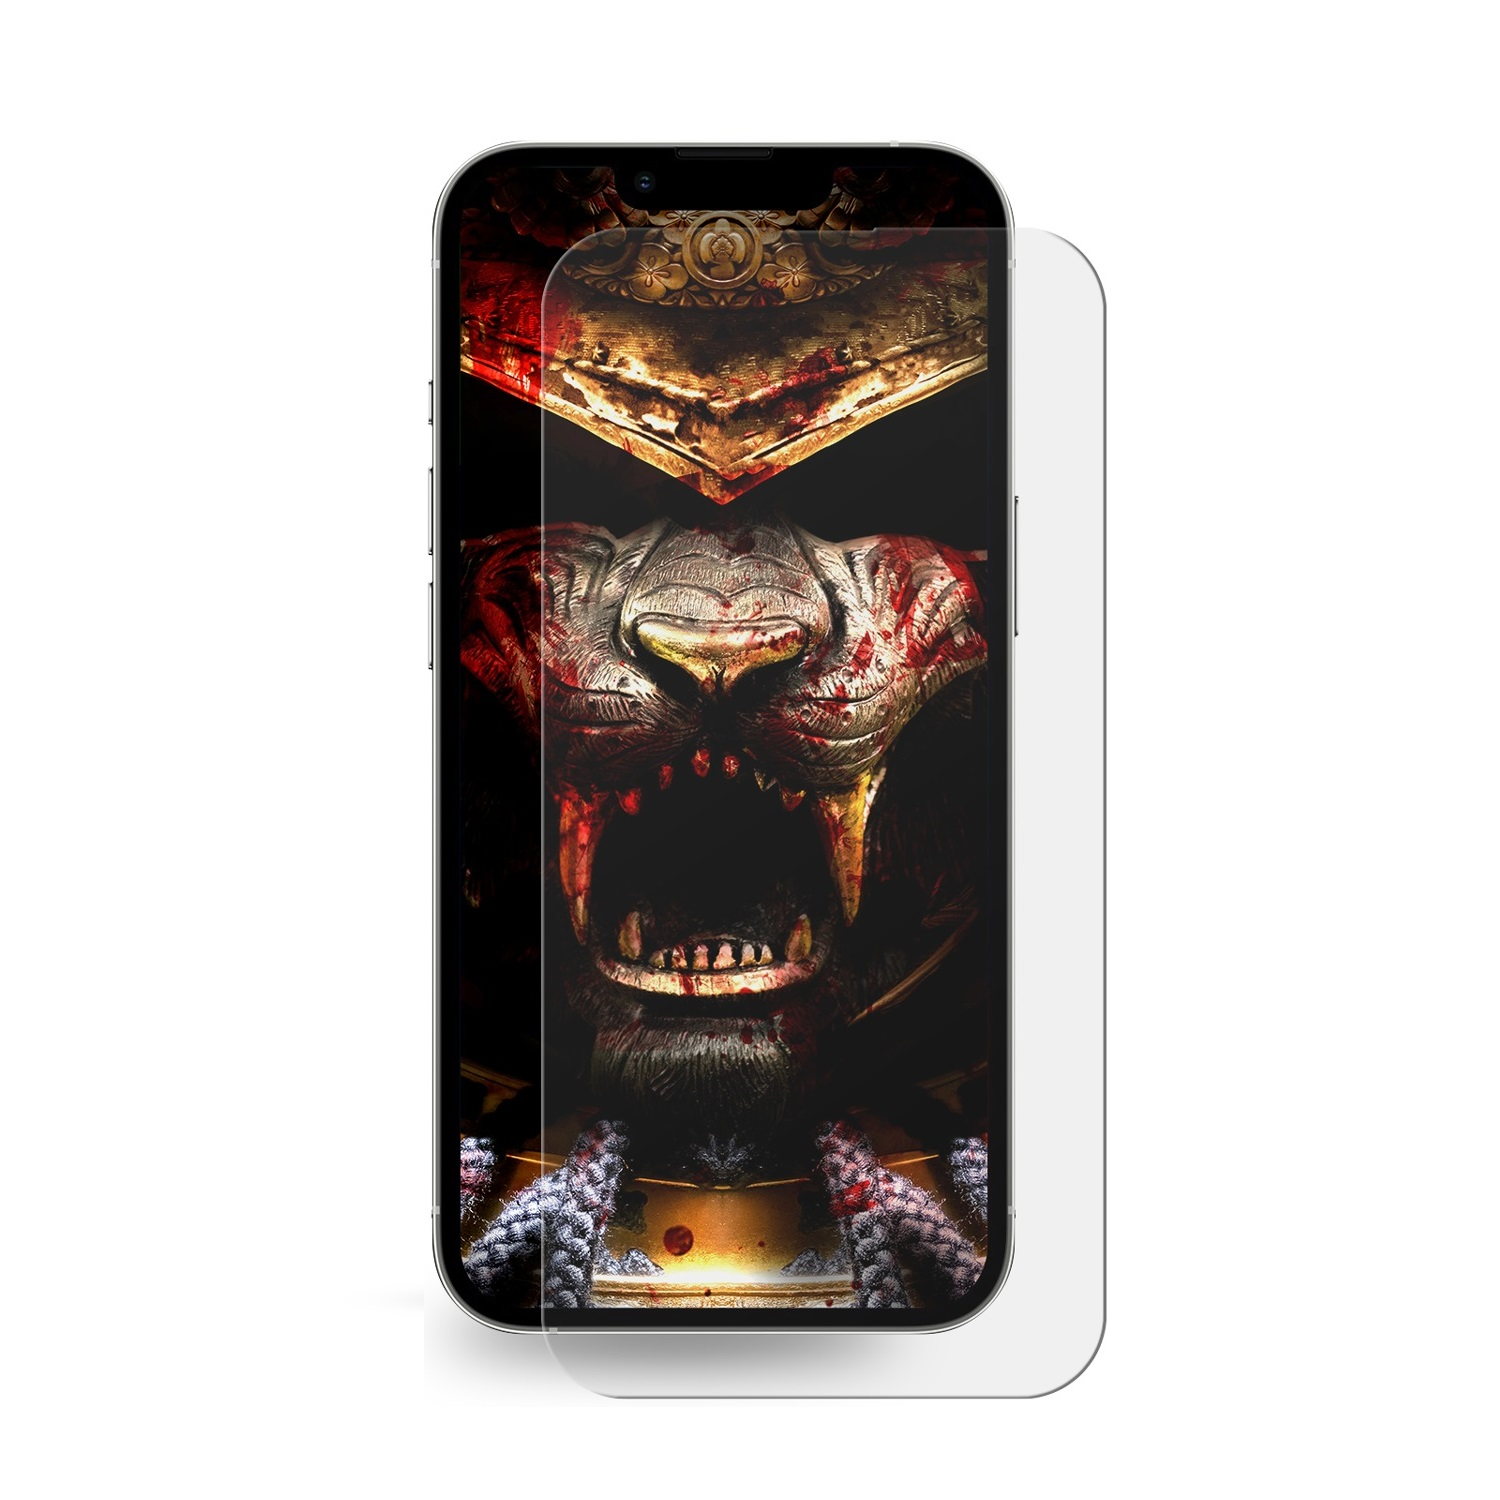 PROTECTORKING 4x FULL COVER Max) HYDROGEL Pro iPhone Displayschutzfolie(für 14 Apple Panzerfolie KLAR HD